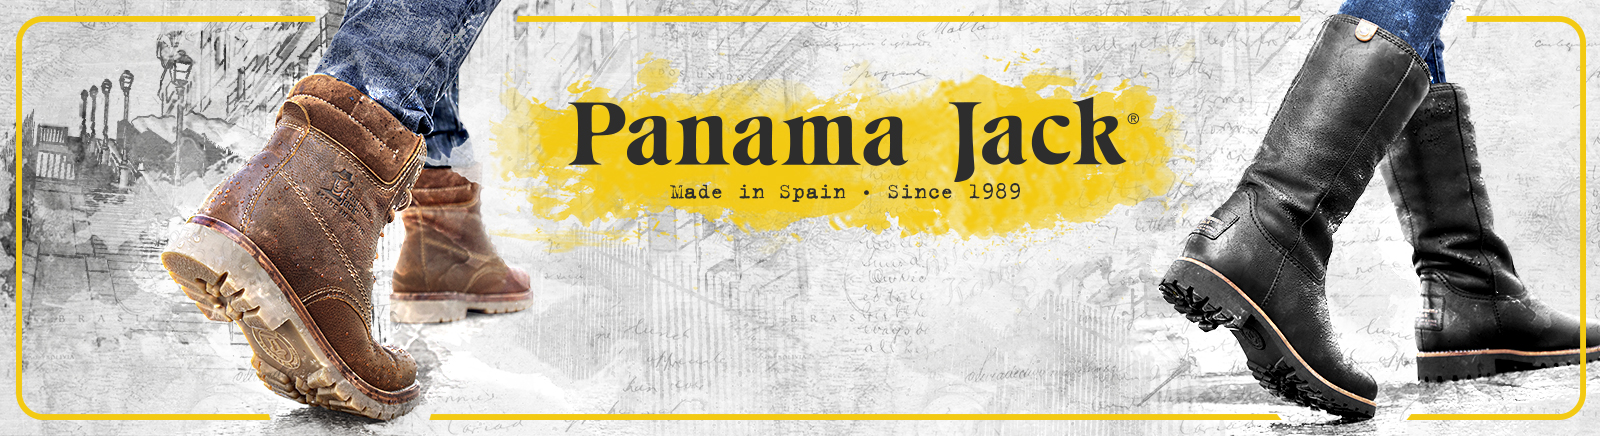 Juppen: Panama Jack Combat Boots für Damen online shoppen